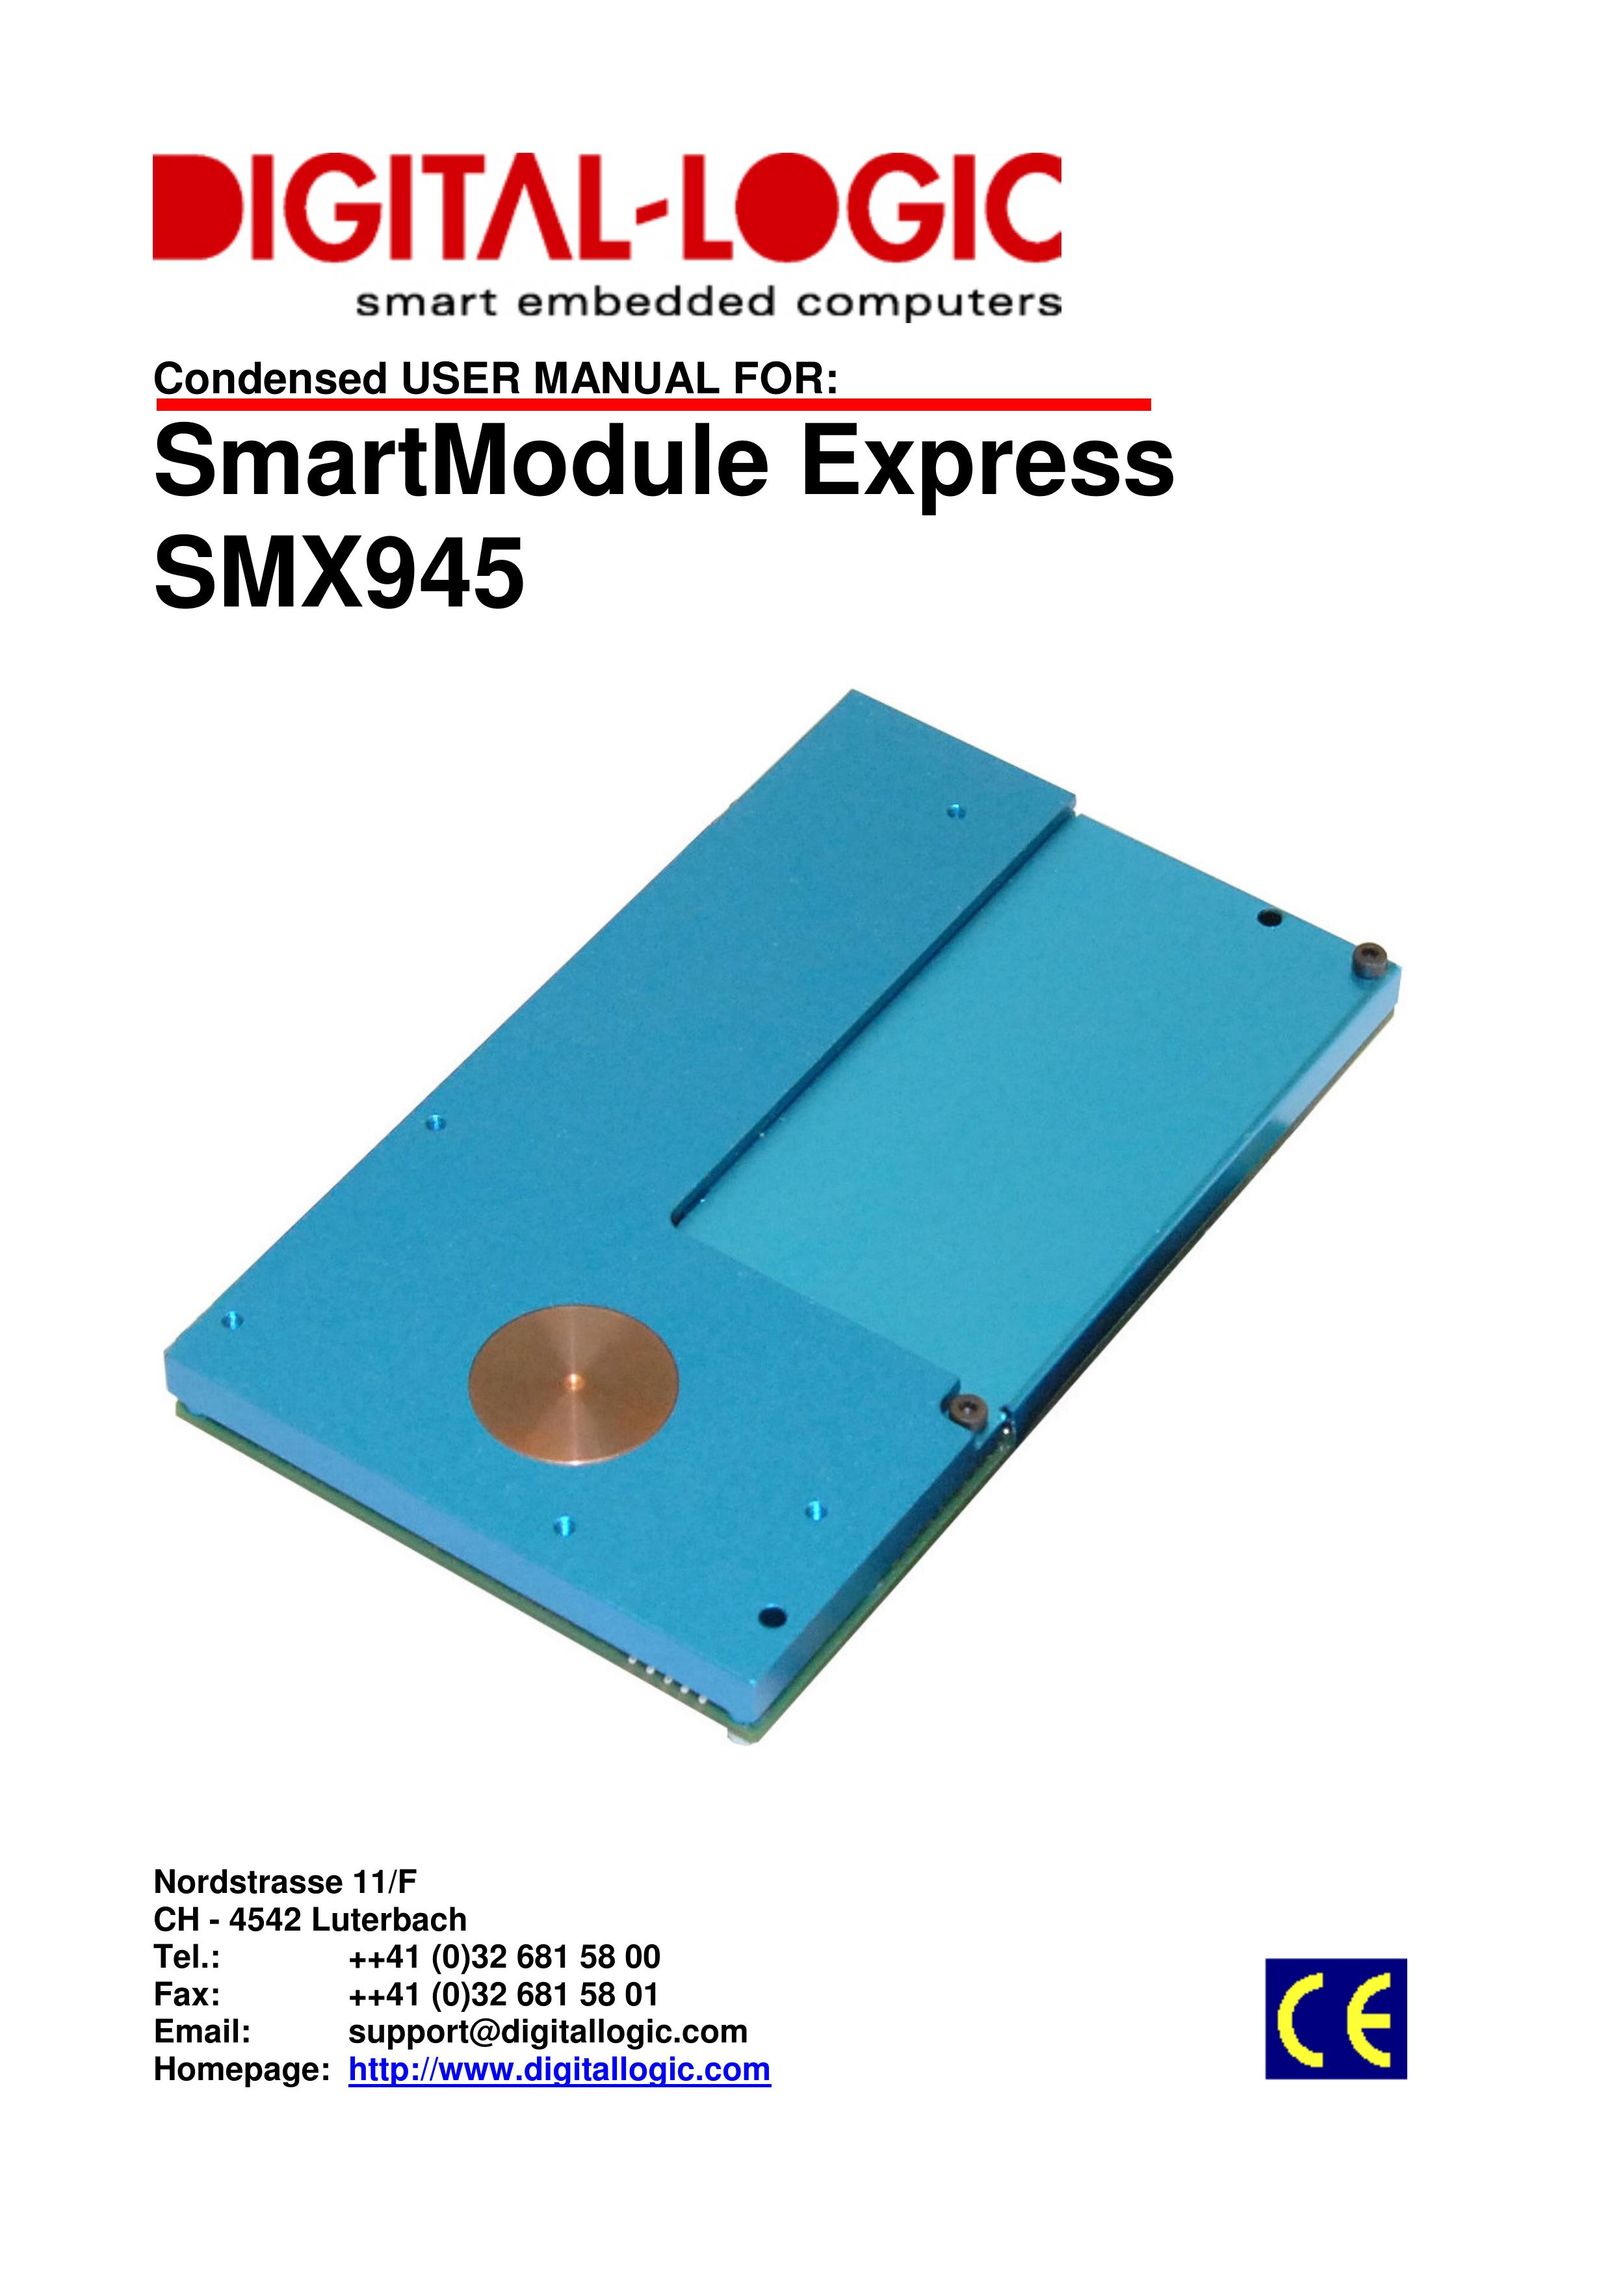 Compaq SMX945 Computer Hardware User Manual